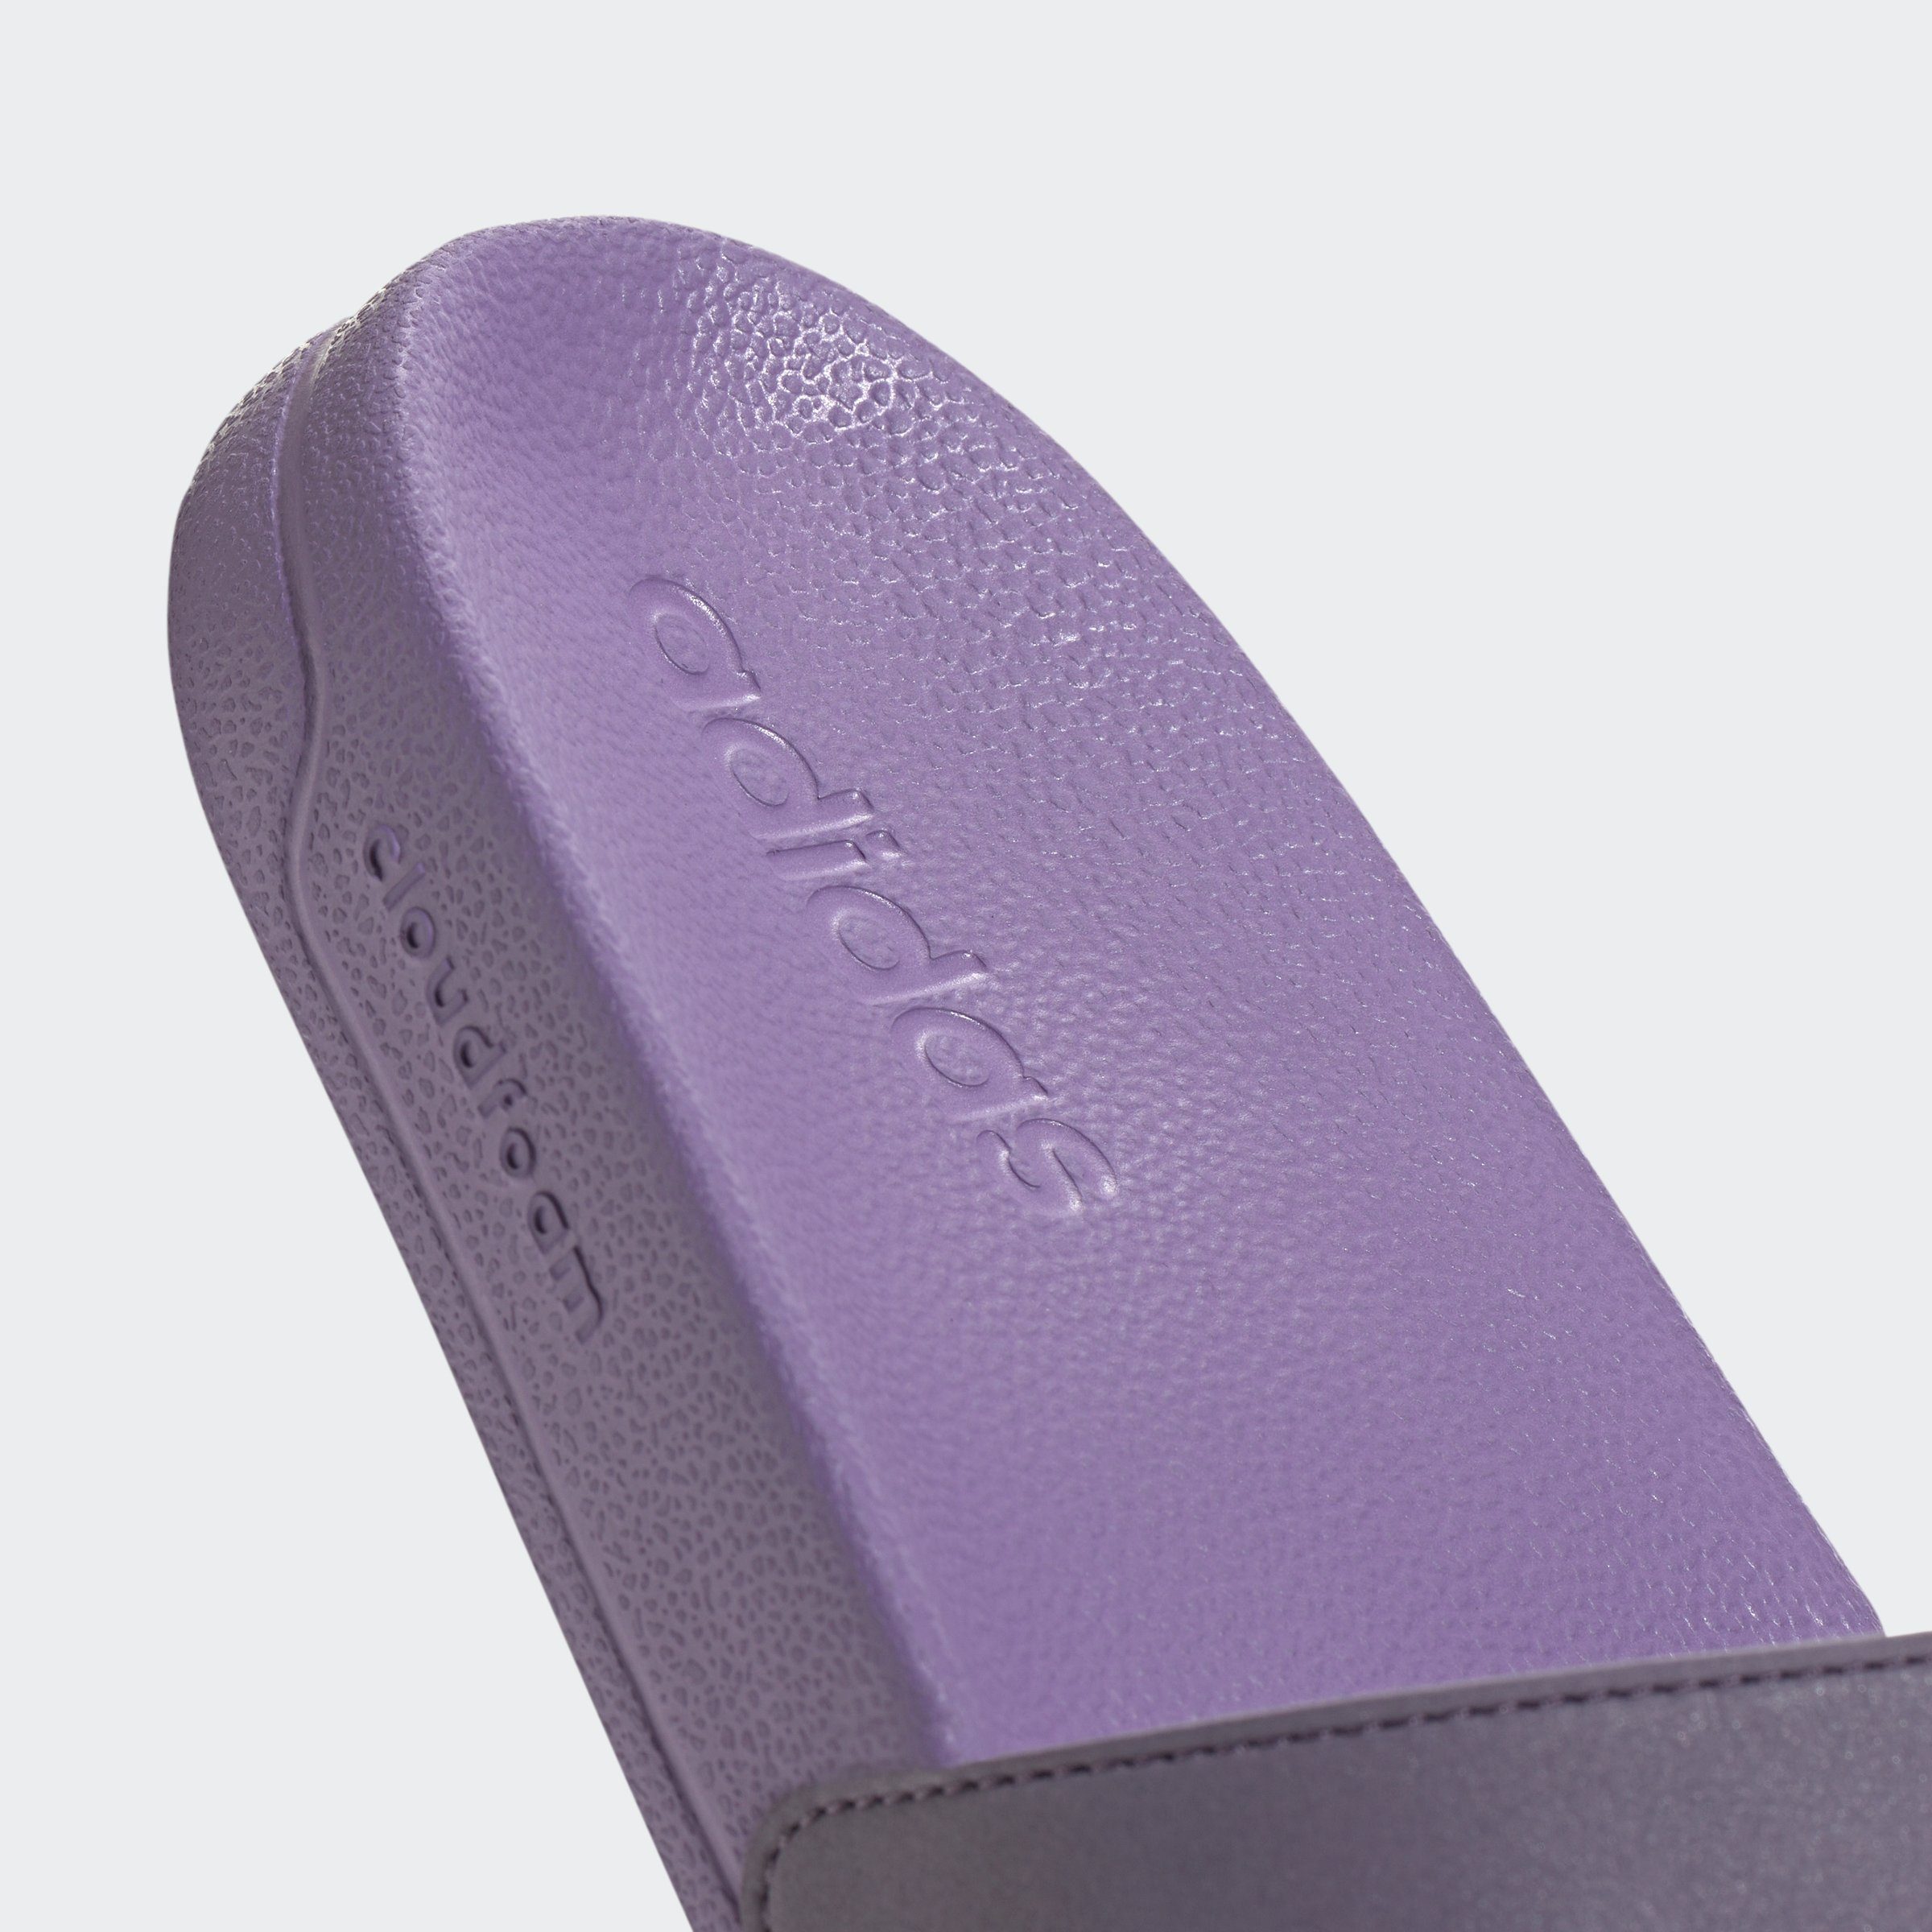 Impact Badesandale Sportswear / adidas Orange SHOWER ADILETTE Fusion Shadow Violet / Violet